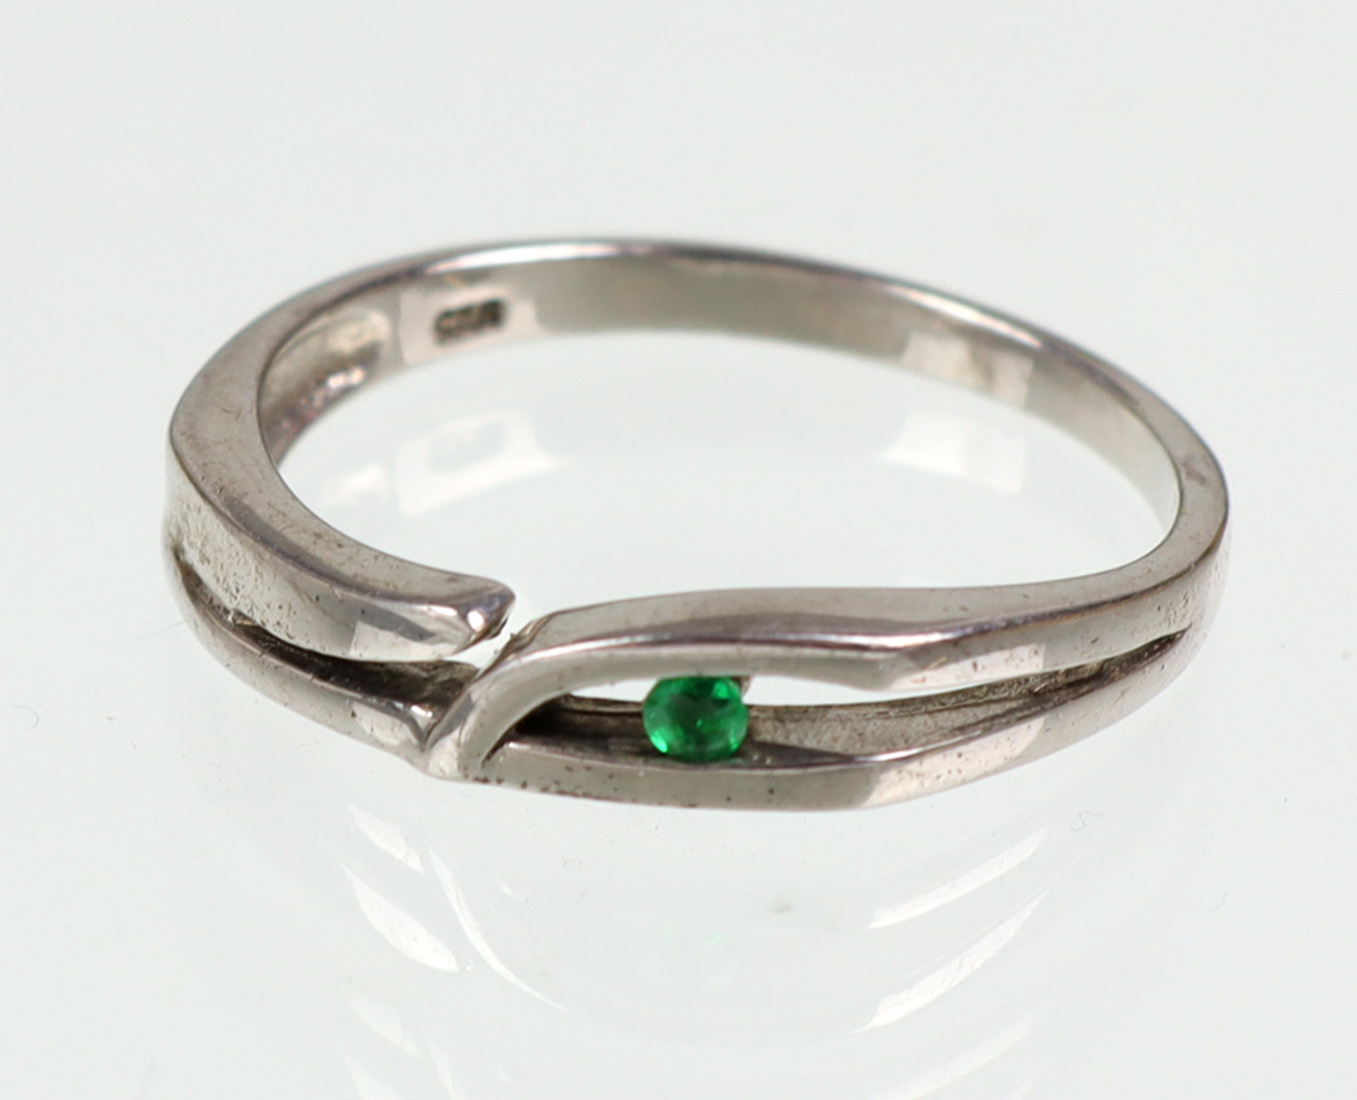 Smaragd Ring Silber 925punziert, Gewicht ca. 1,84 Gramm, Ringkopf mit Smaragd (Sambia)